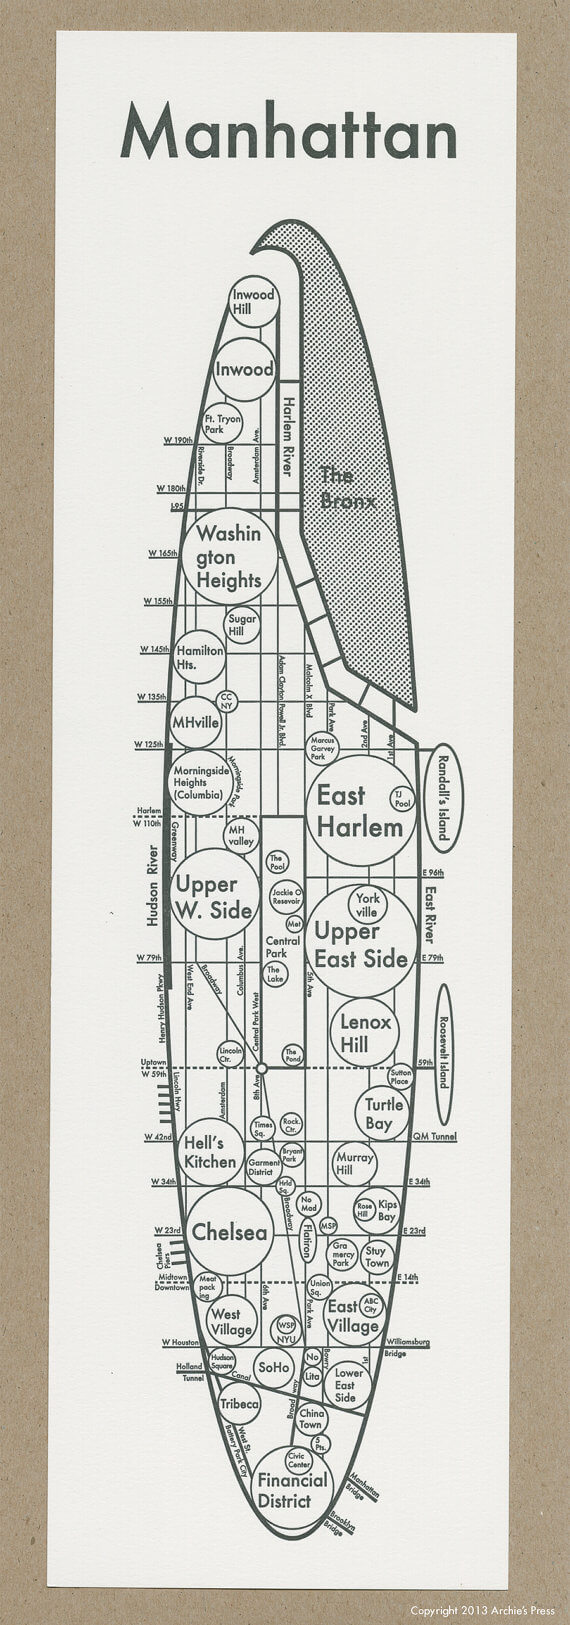 Manhattan map, by Archie's Press